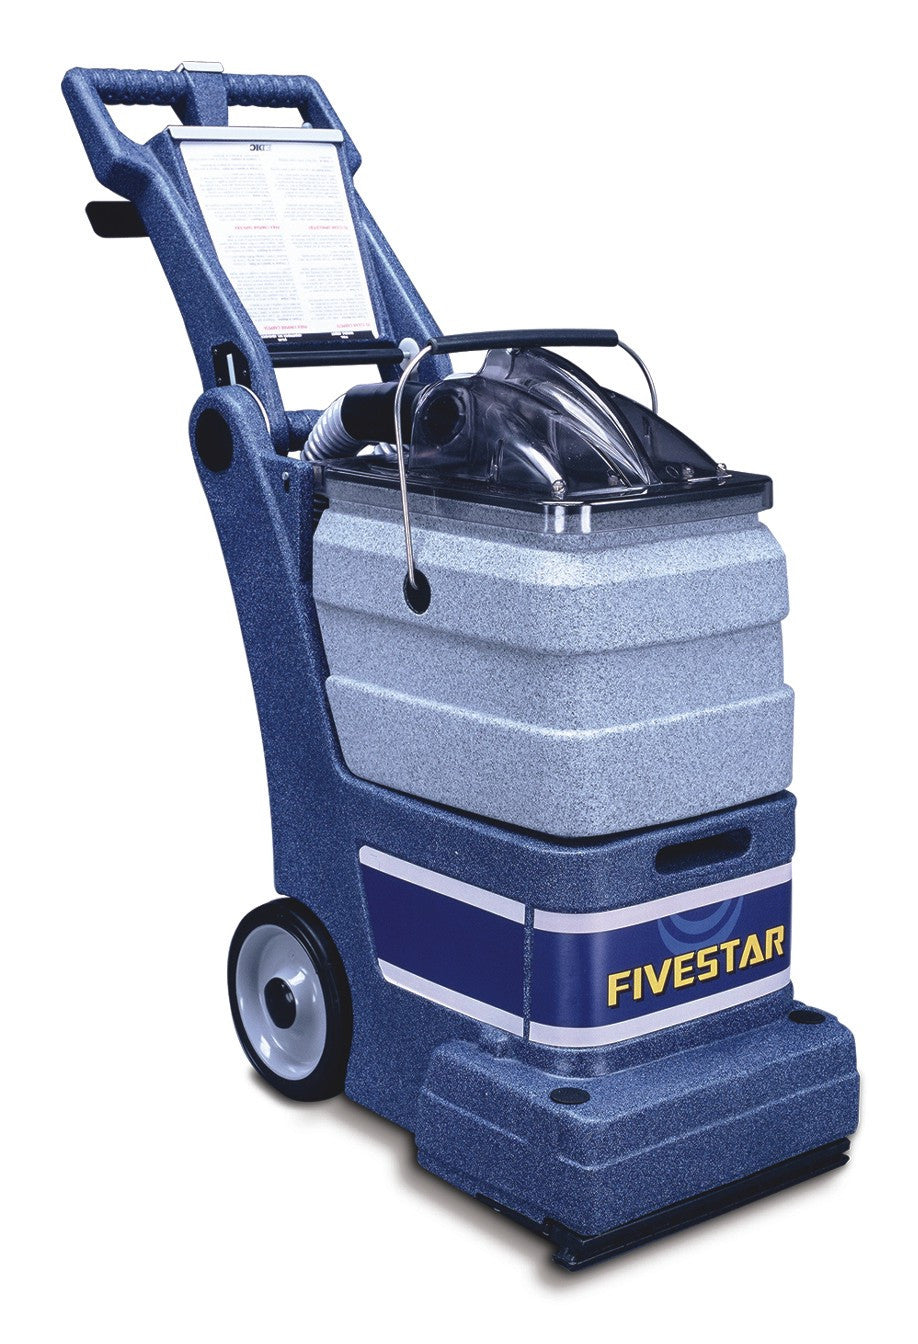 Prochem TR300 Fivestar Carpet Cleaning Machine